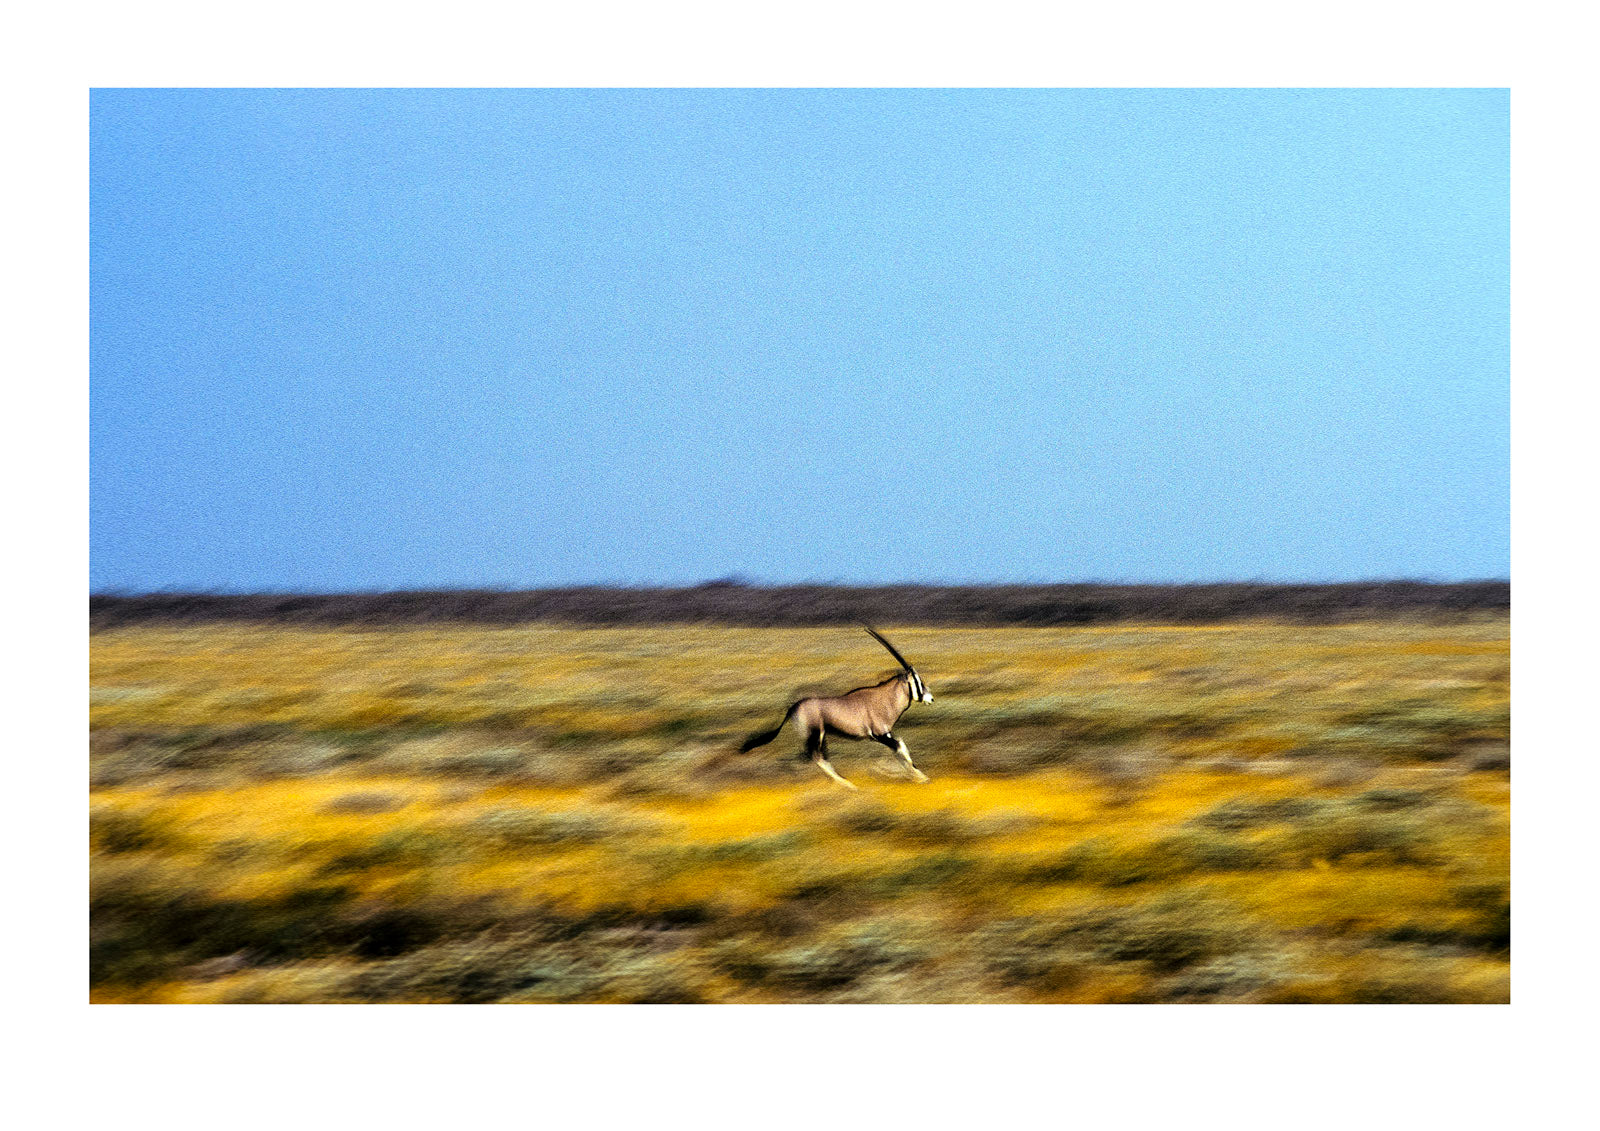 A gemsbok on the move, runs across a grassy plain at sunset. Etosha National Park, Namibia.